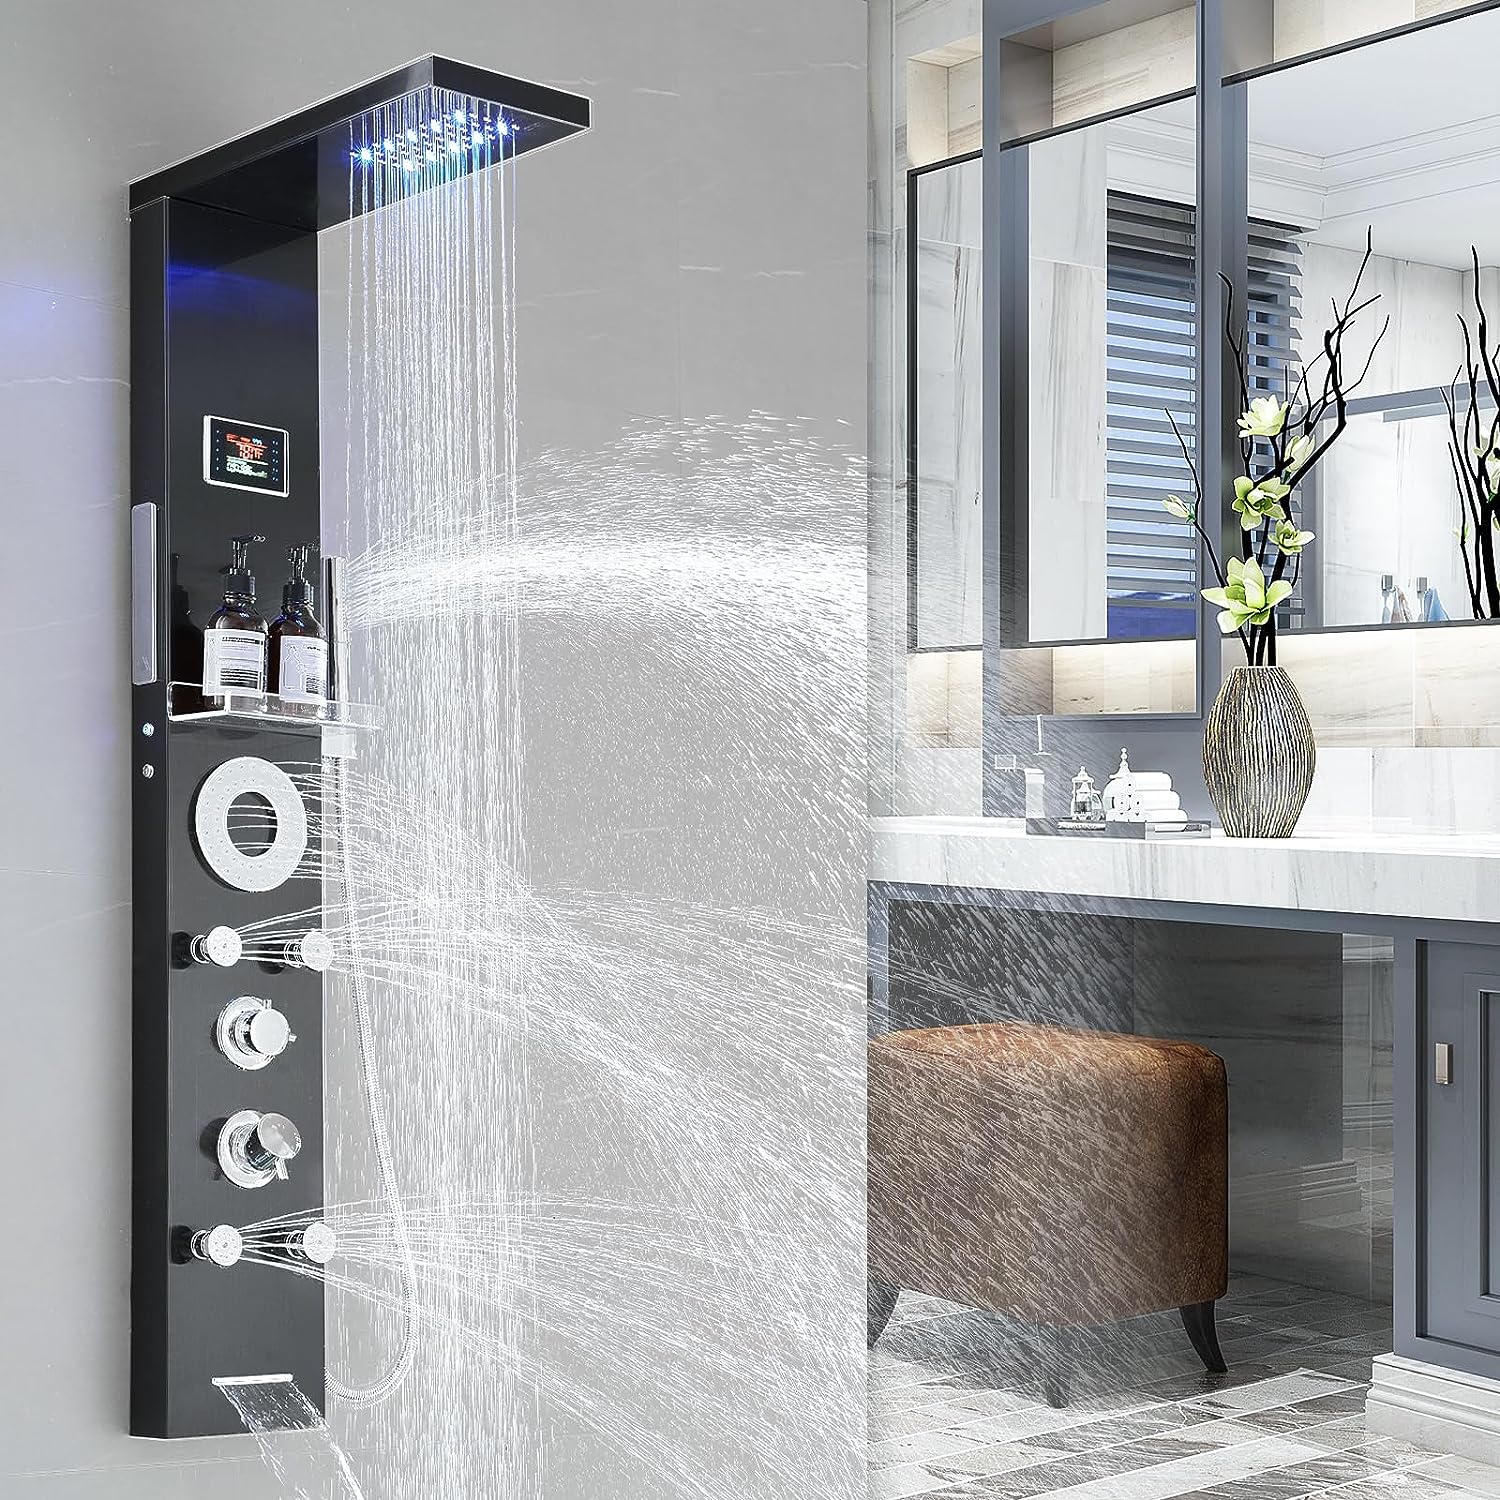 matte-black-shower-panel-tower-system-5-function-shower-faucet-set-led-light-rainfall-shower-head-digital-display-with-massage-jets-tub-spout-shower-shelves-stainless-steel-wall-mount